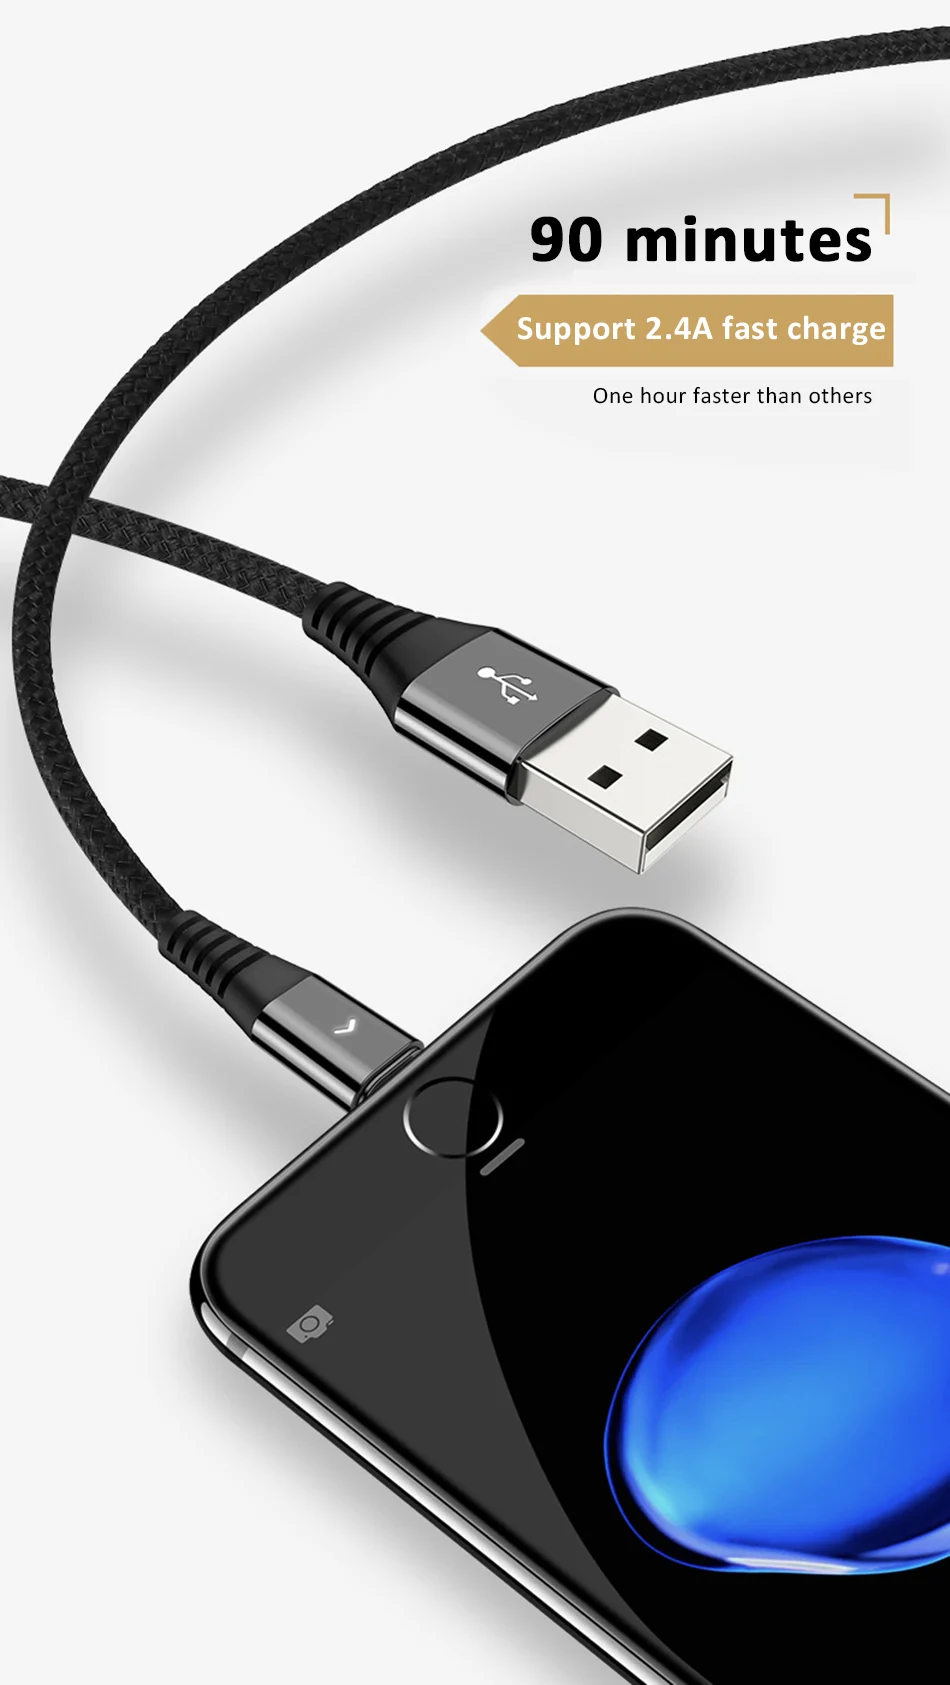 ACCEZZ USB кабель для зарядки и синхронизации освещение для Apple iphone XS XR X 8 7 6 6S 5S Plus для iPad Air 1 2 Дата шнур